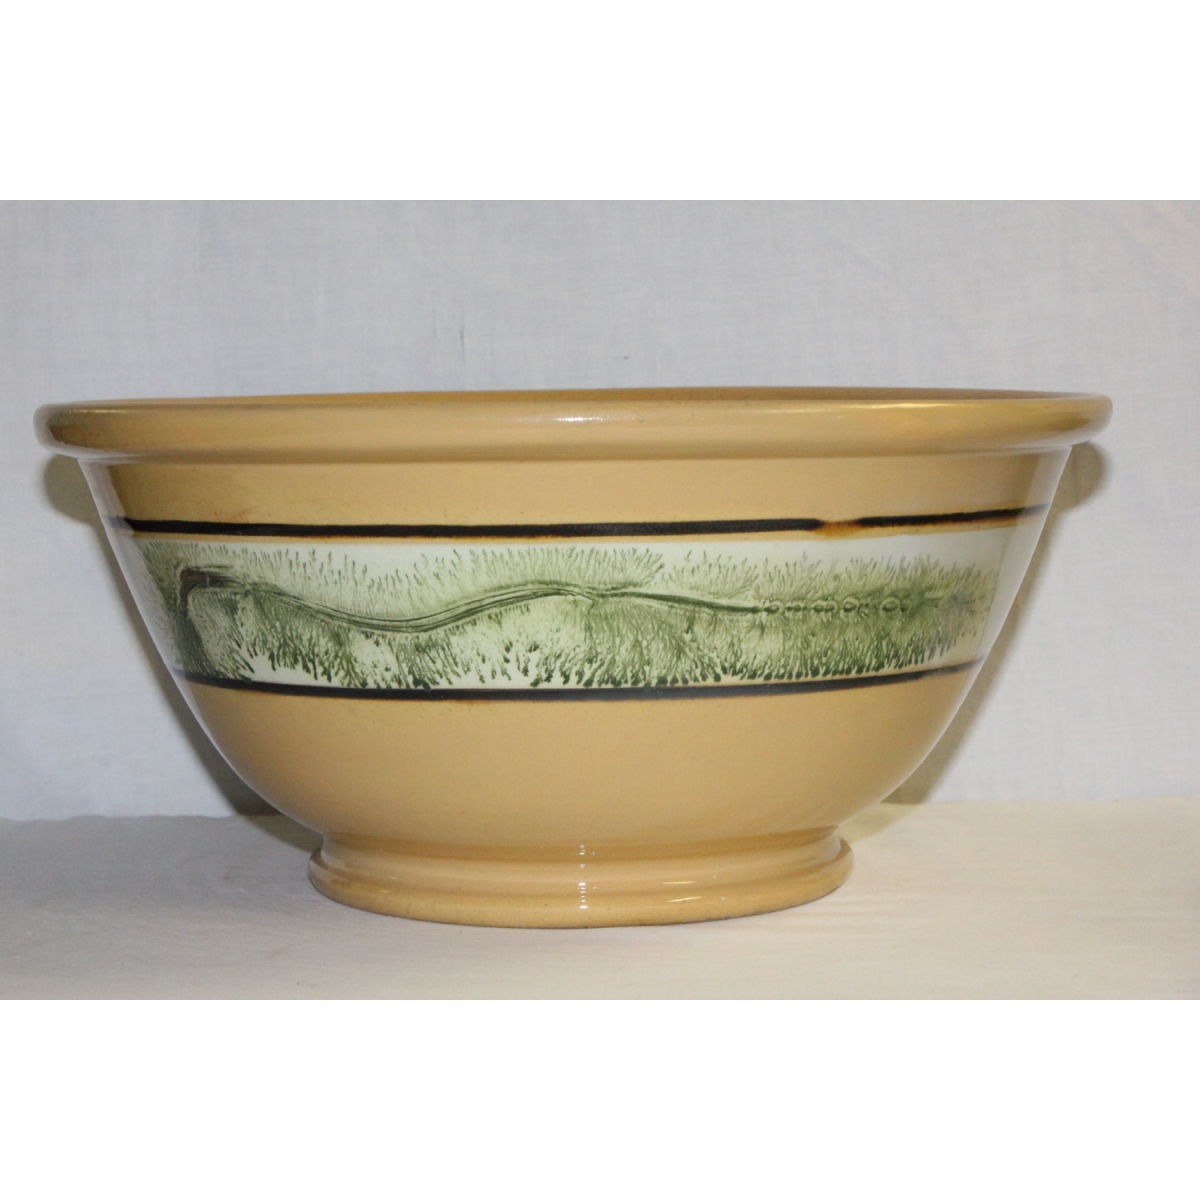 Fabulous Huge Green Seaweed-Decorated Yellowware Bowl